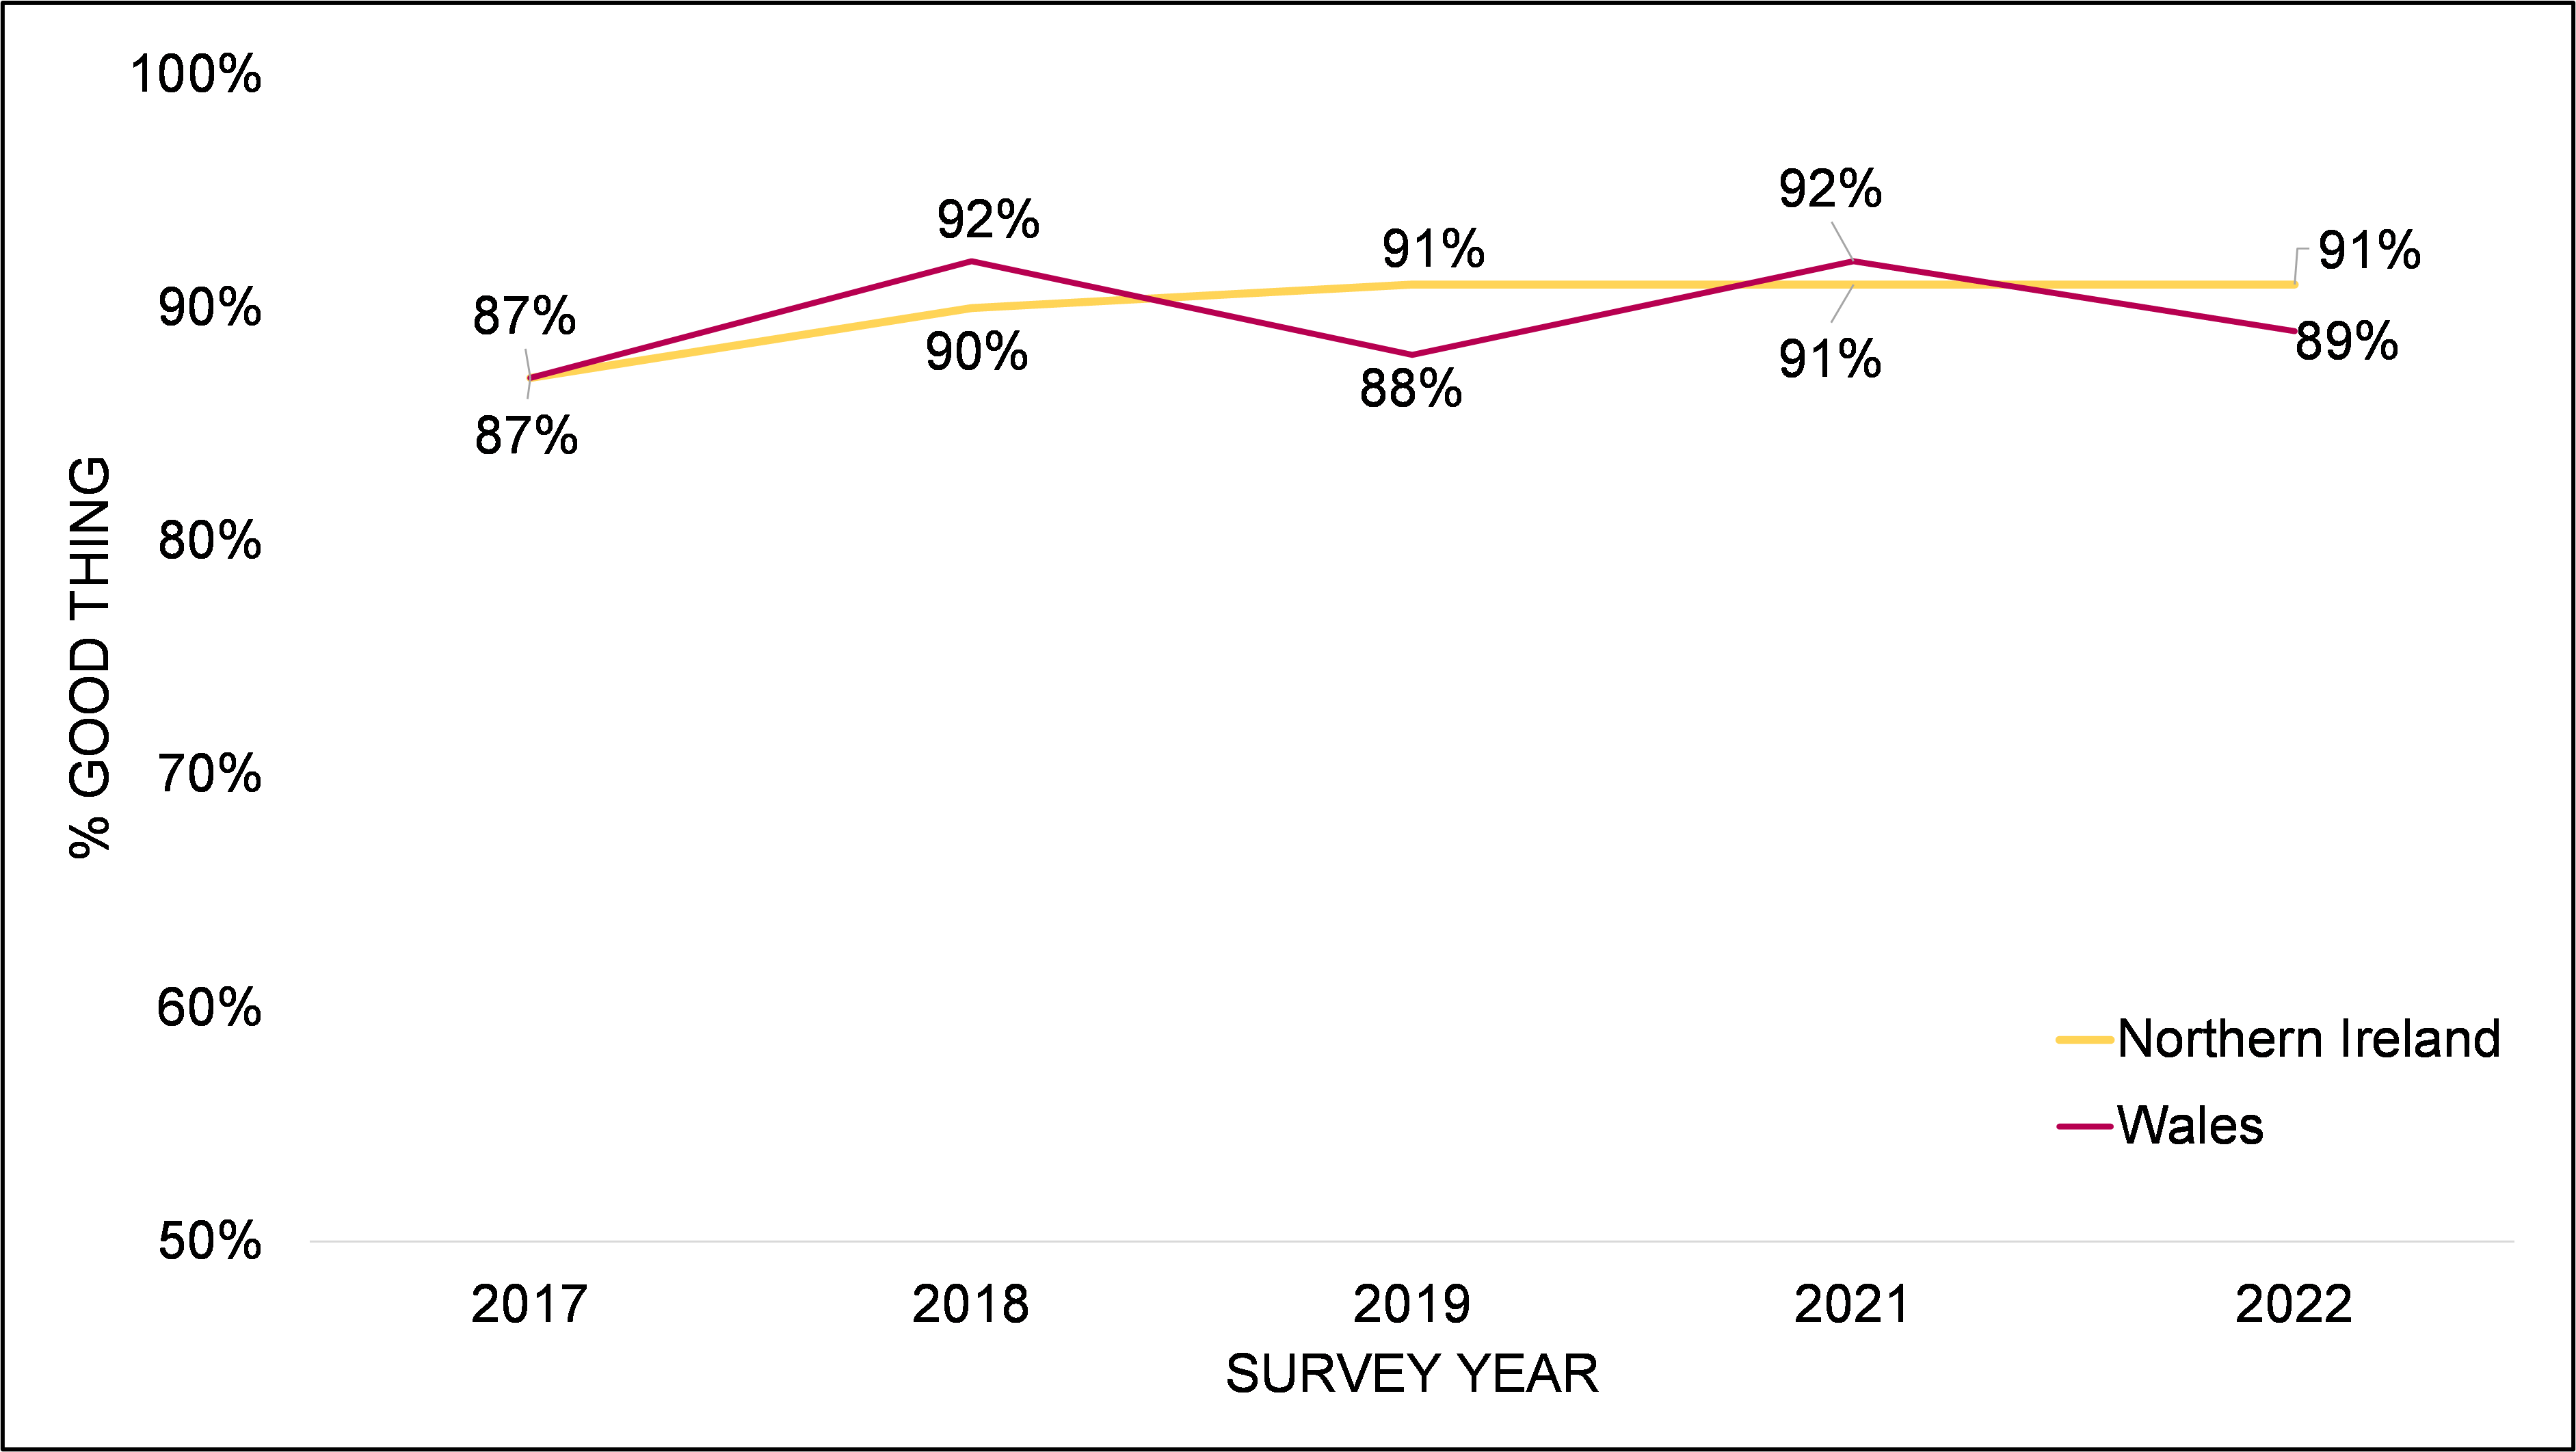 Northern Ireland: 2017 87%, 2018 90%, 2019 91%, 2021 91%, 2022 91%.  Wales: 2017 87%, 2018 92%, 2019 88%, 2021 92%, 2022 89%.